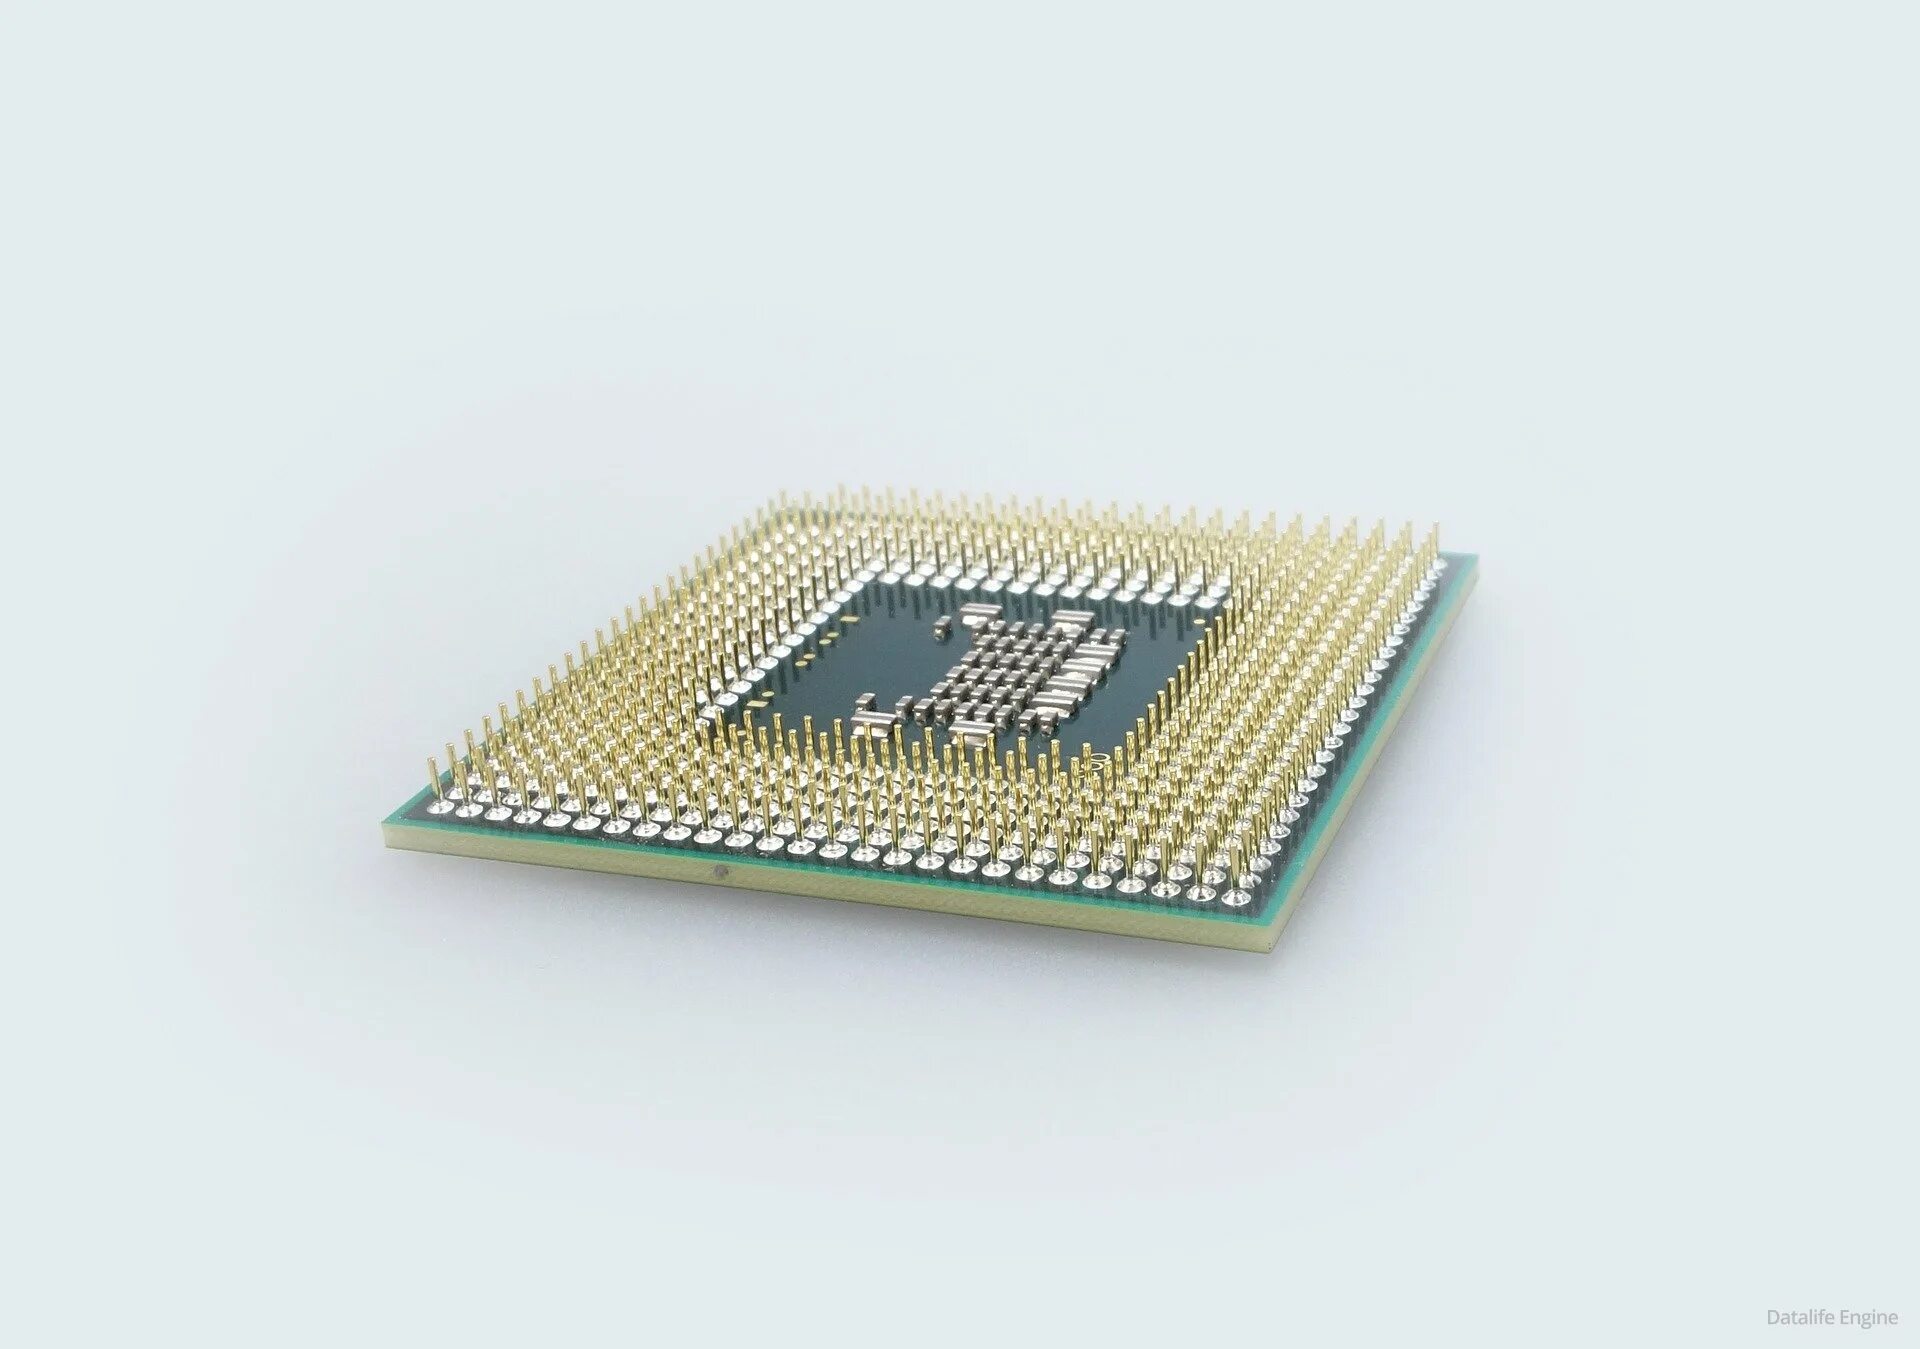 Процессор (CPU) микропроцессор. Микропроцессор Интел. Процессор gforce256. Чип процессора Интел. Intel sde